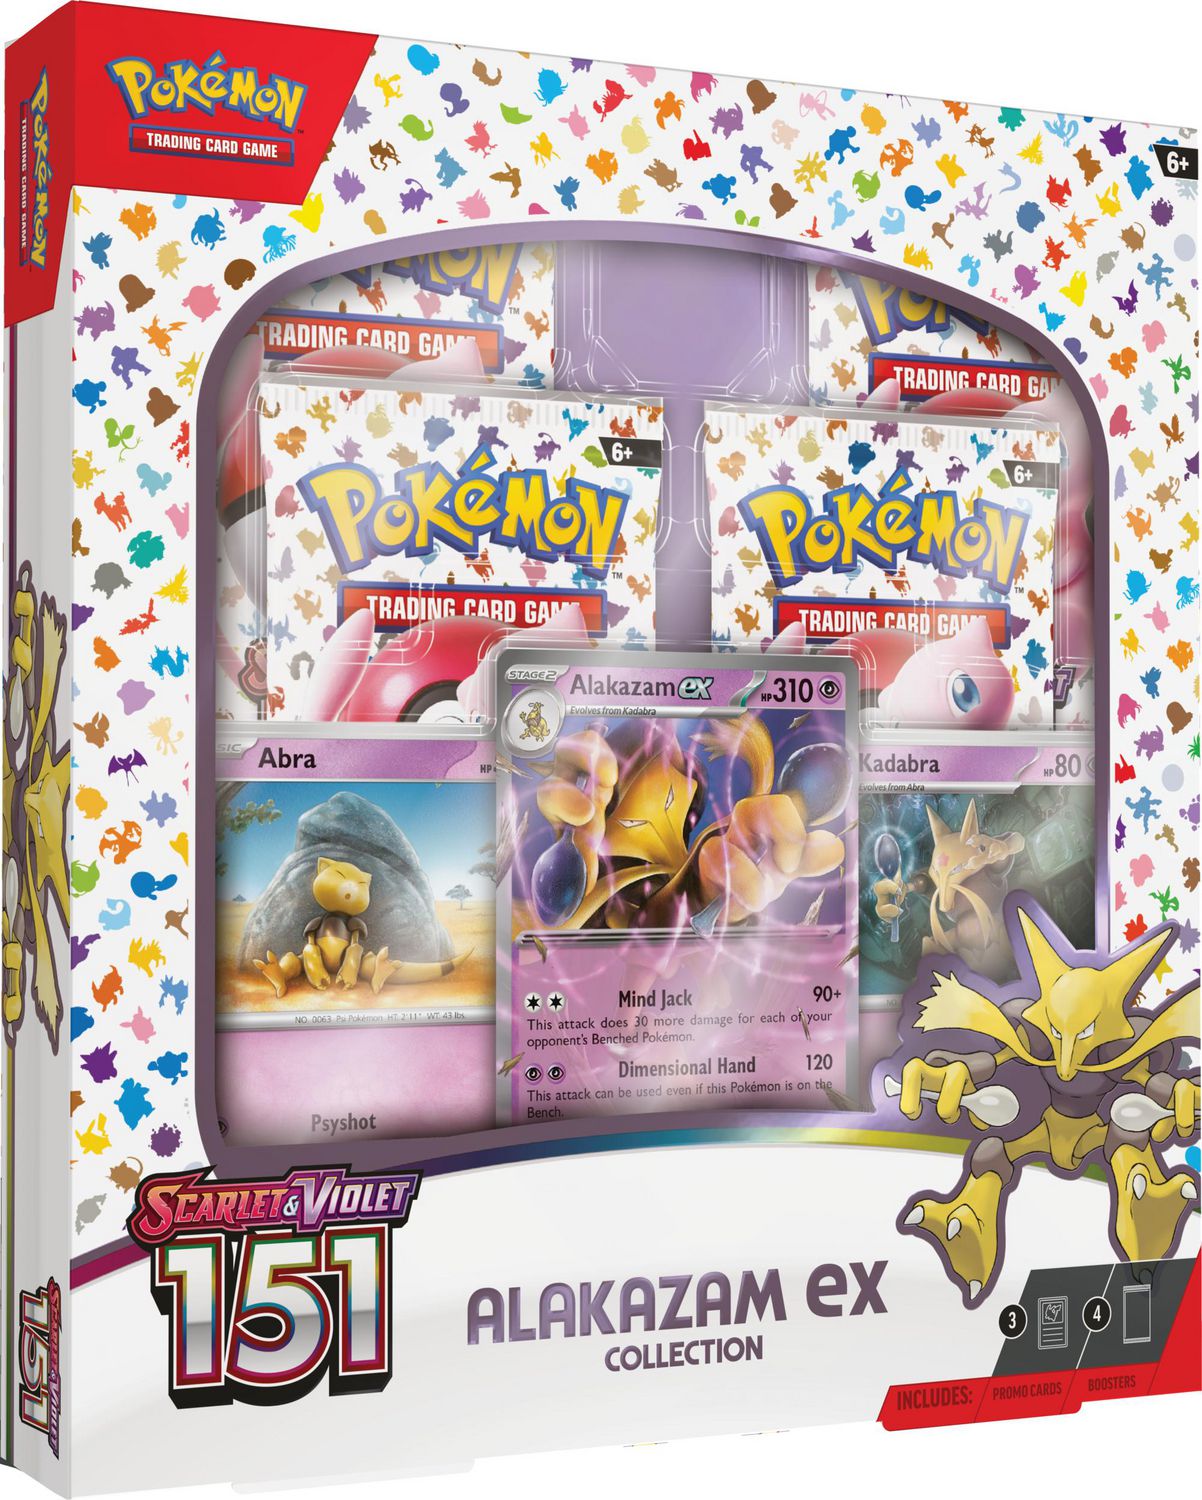 Radiant Alakazam is absolutely stunning IRL. : r/PokemonTCG